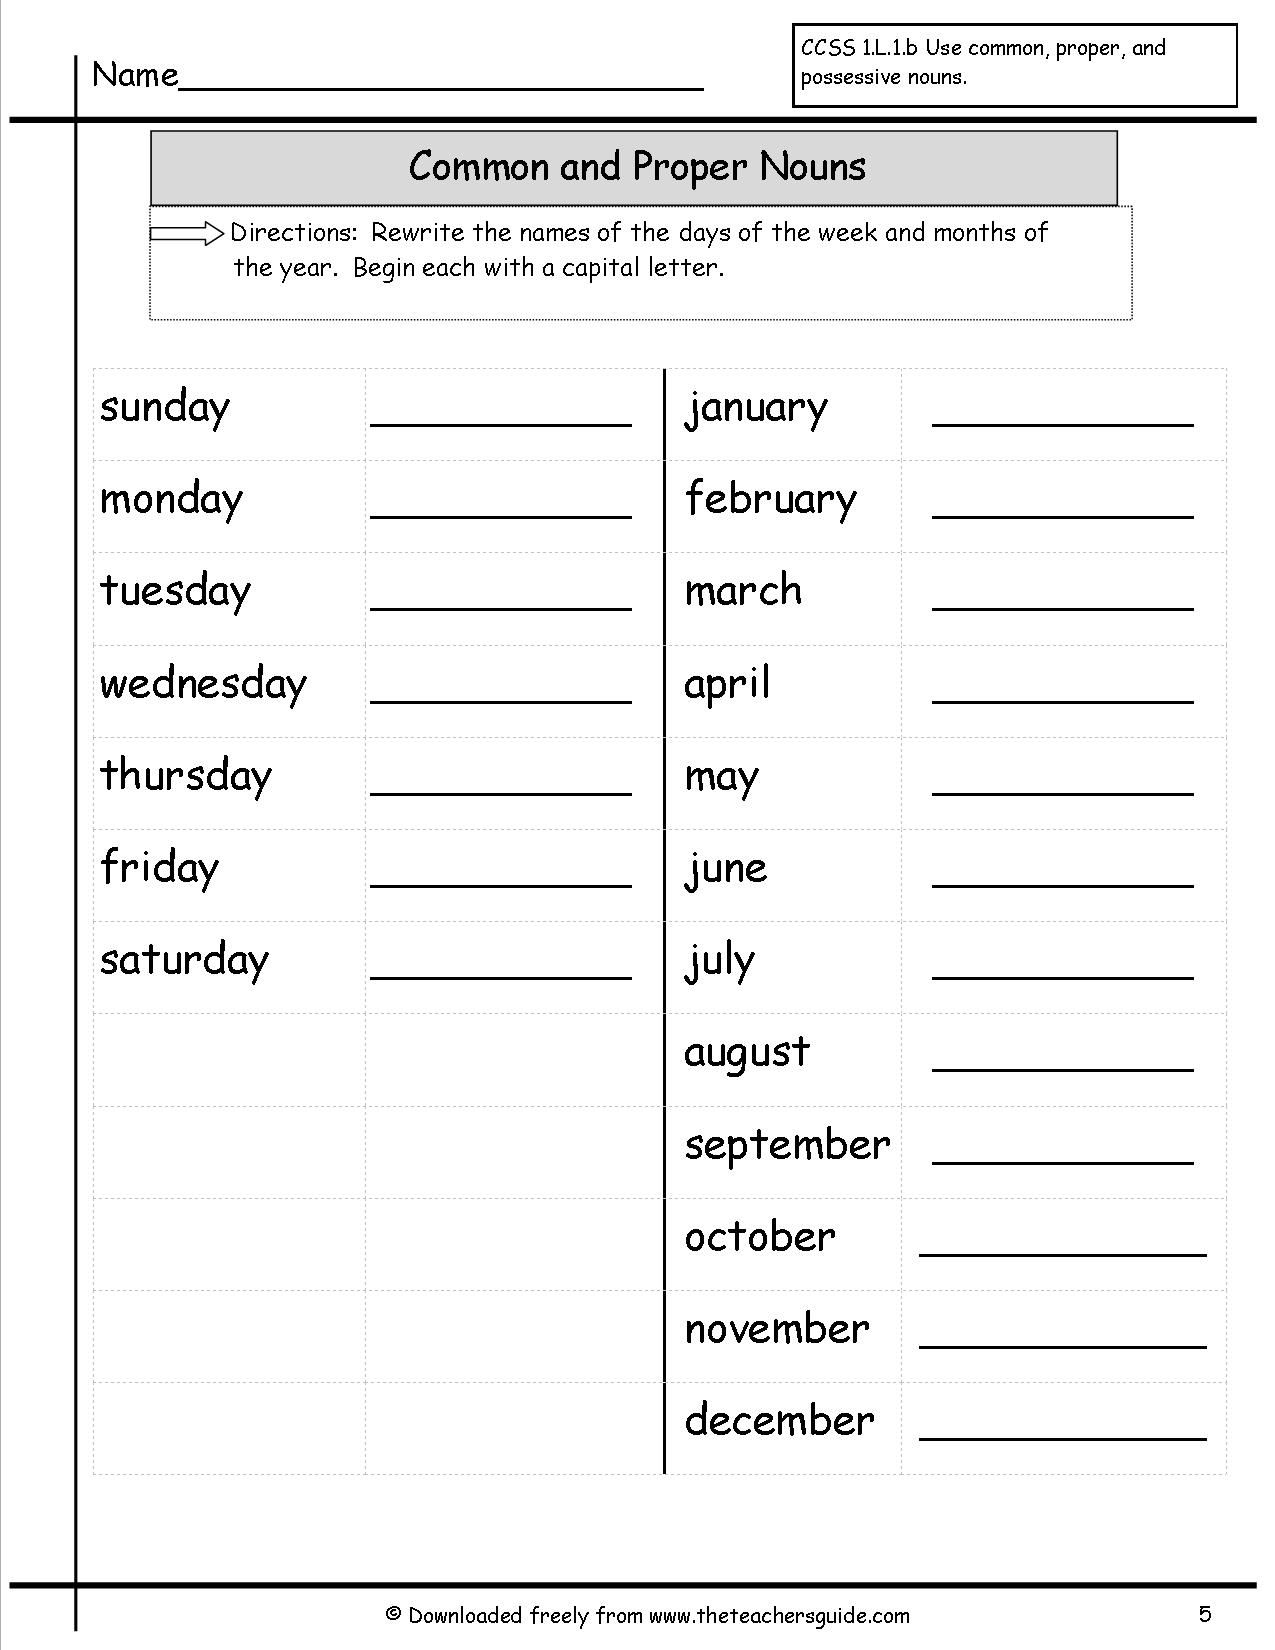 Grade 6 Common And Proper Nouns Worksheet Pdf Kidsworksheetfun